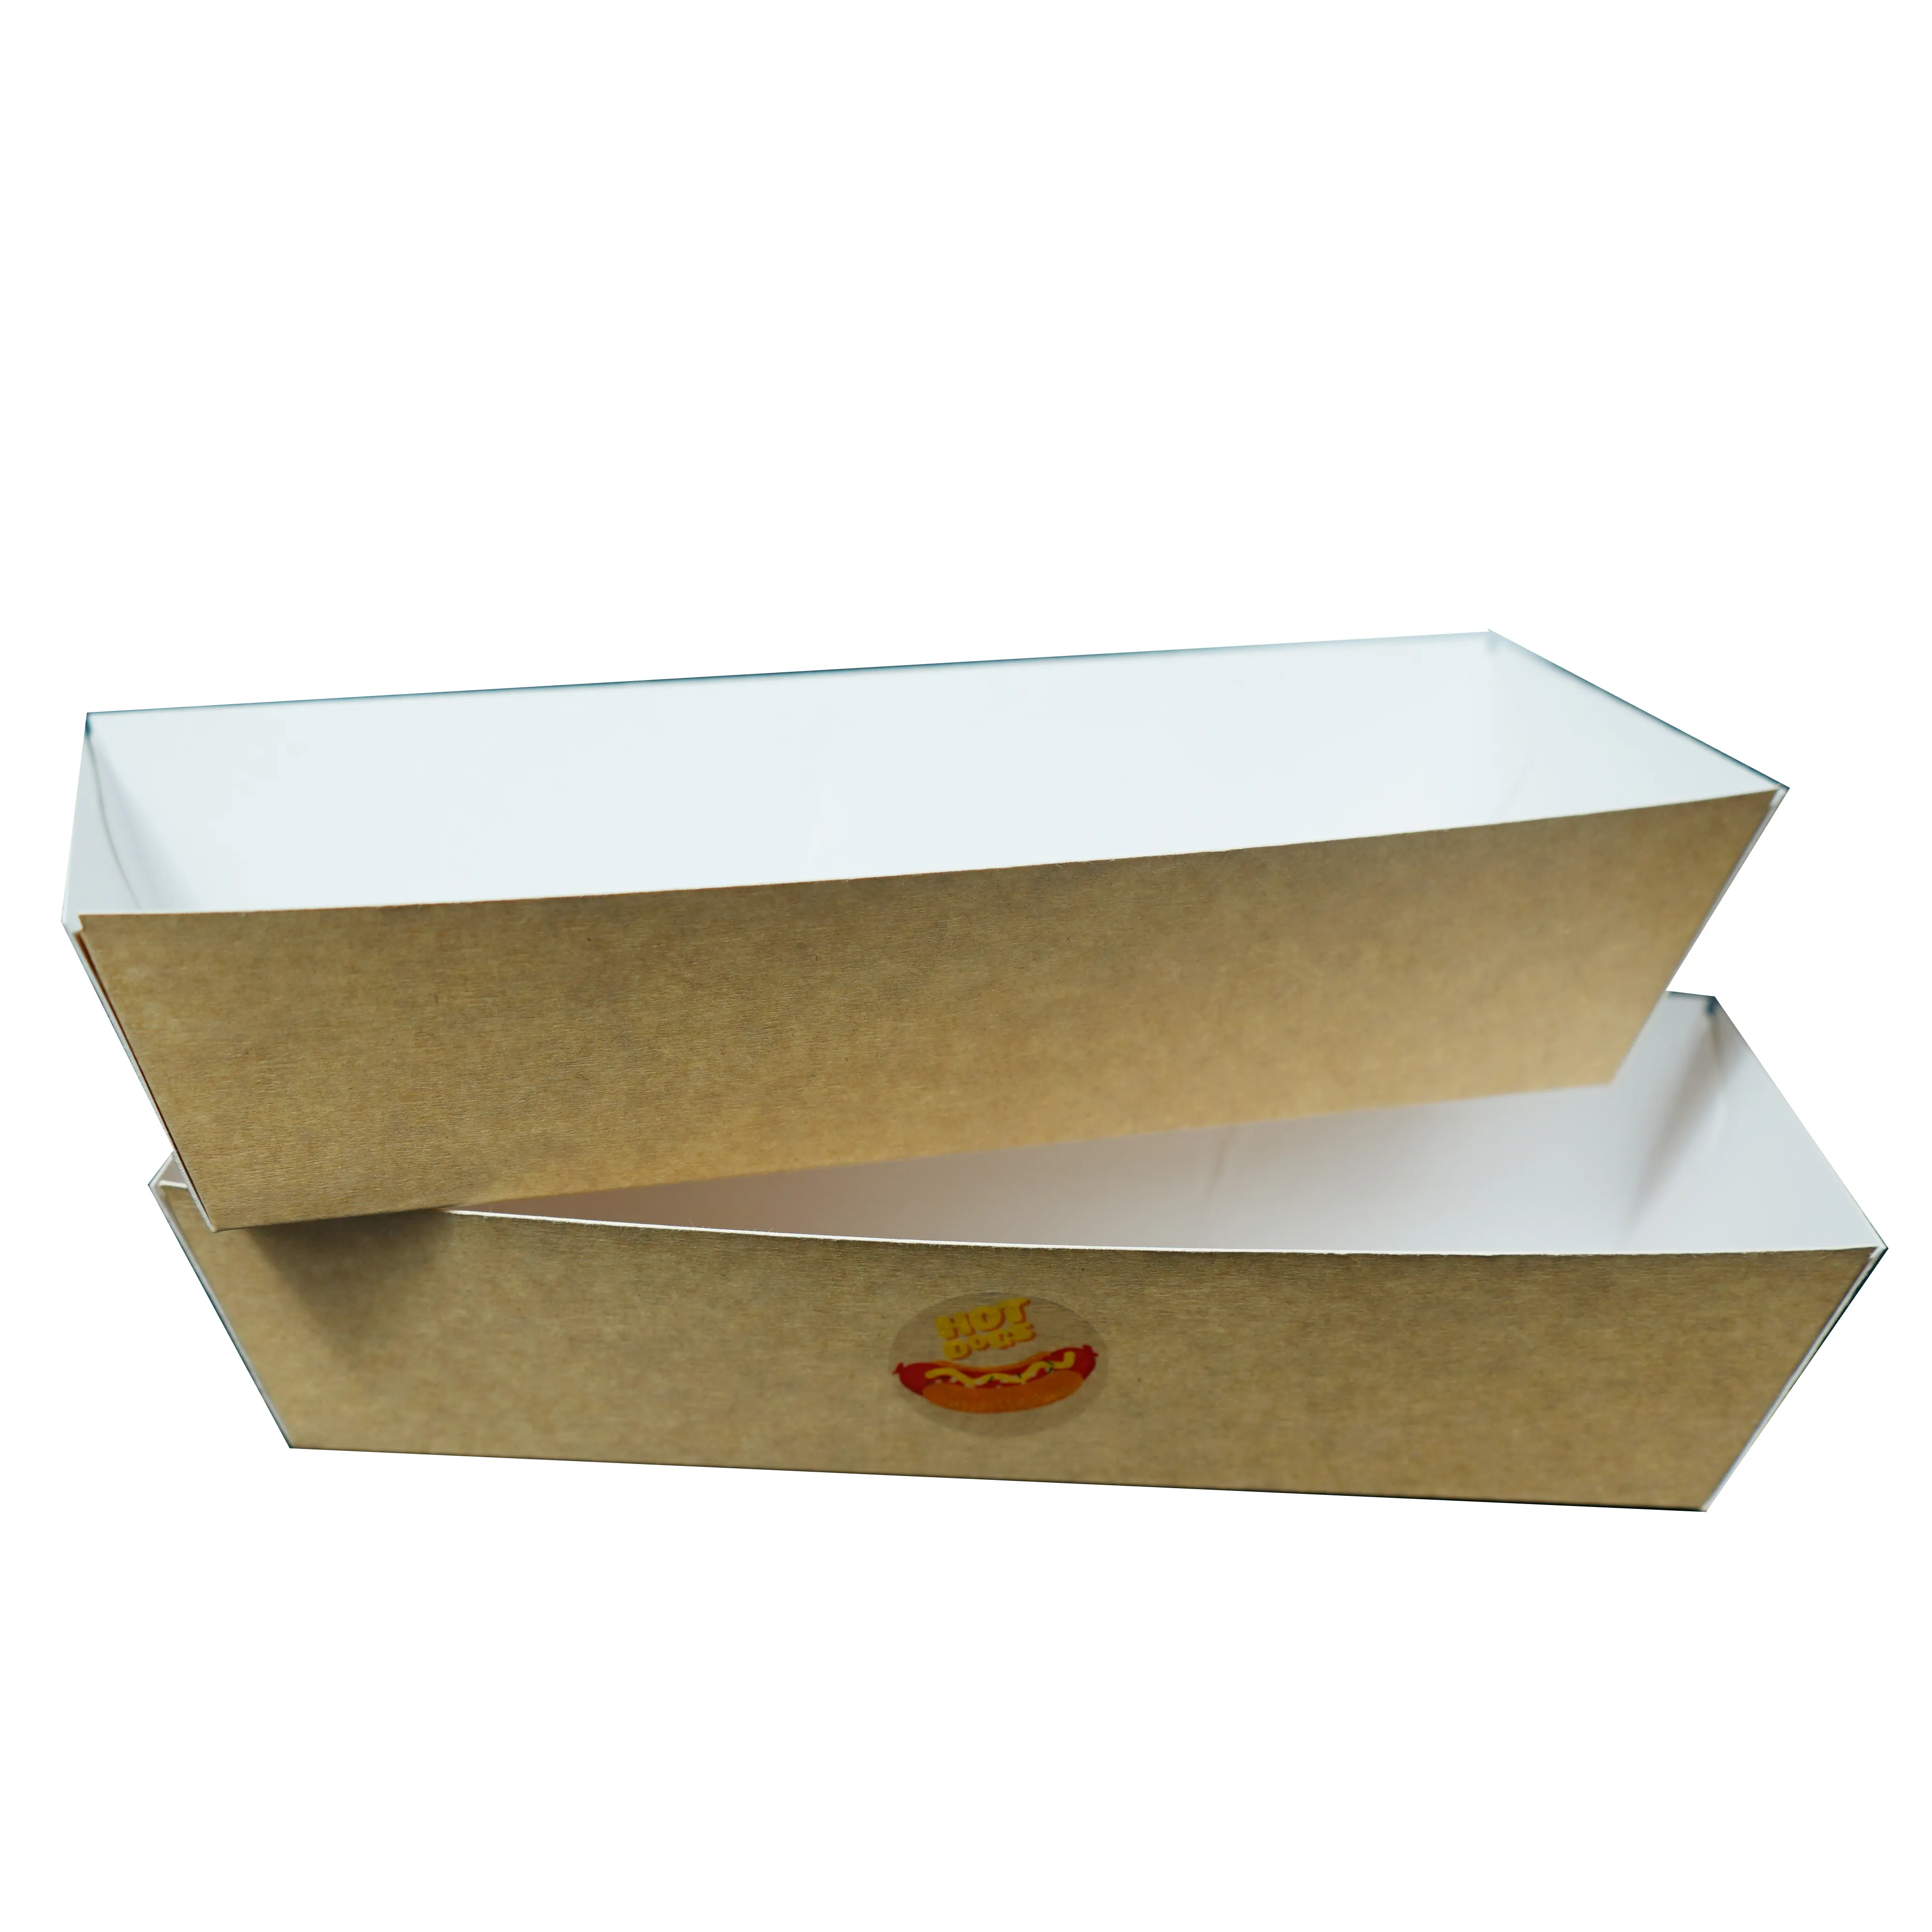 Fabrik Preis Hot Dog Wegnehmen Verpackung Box